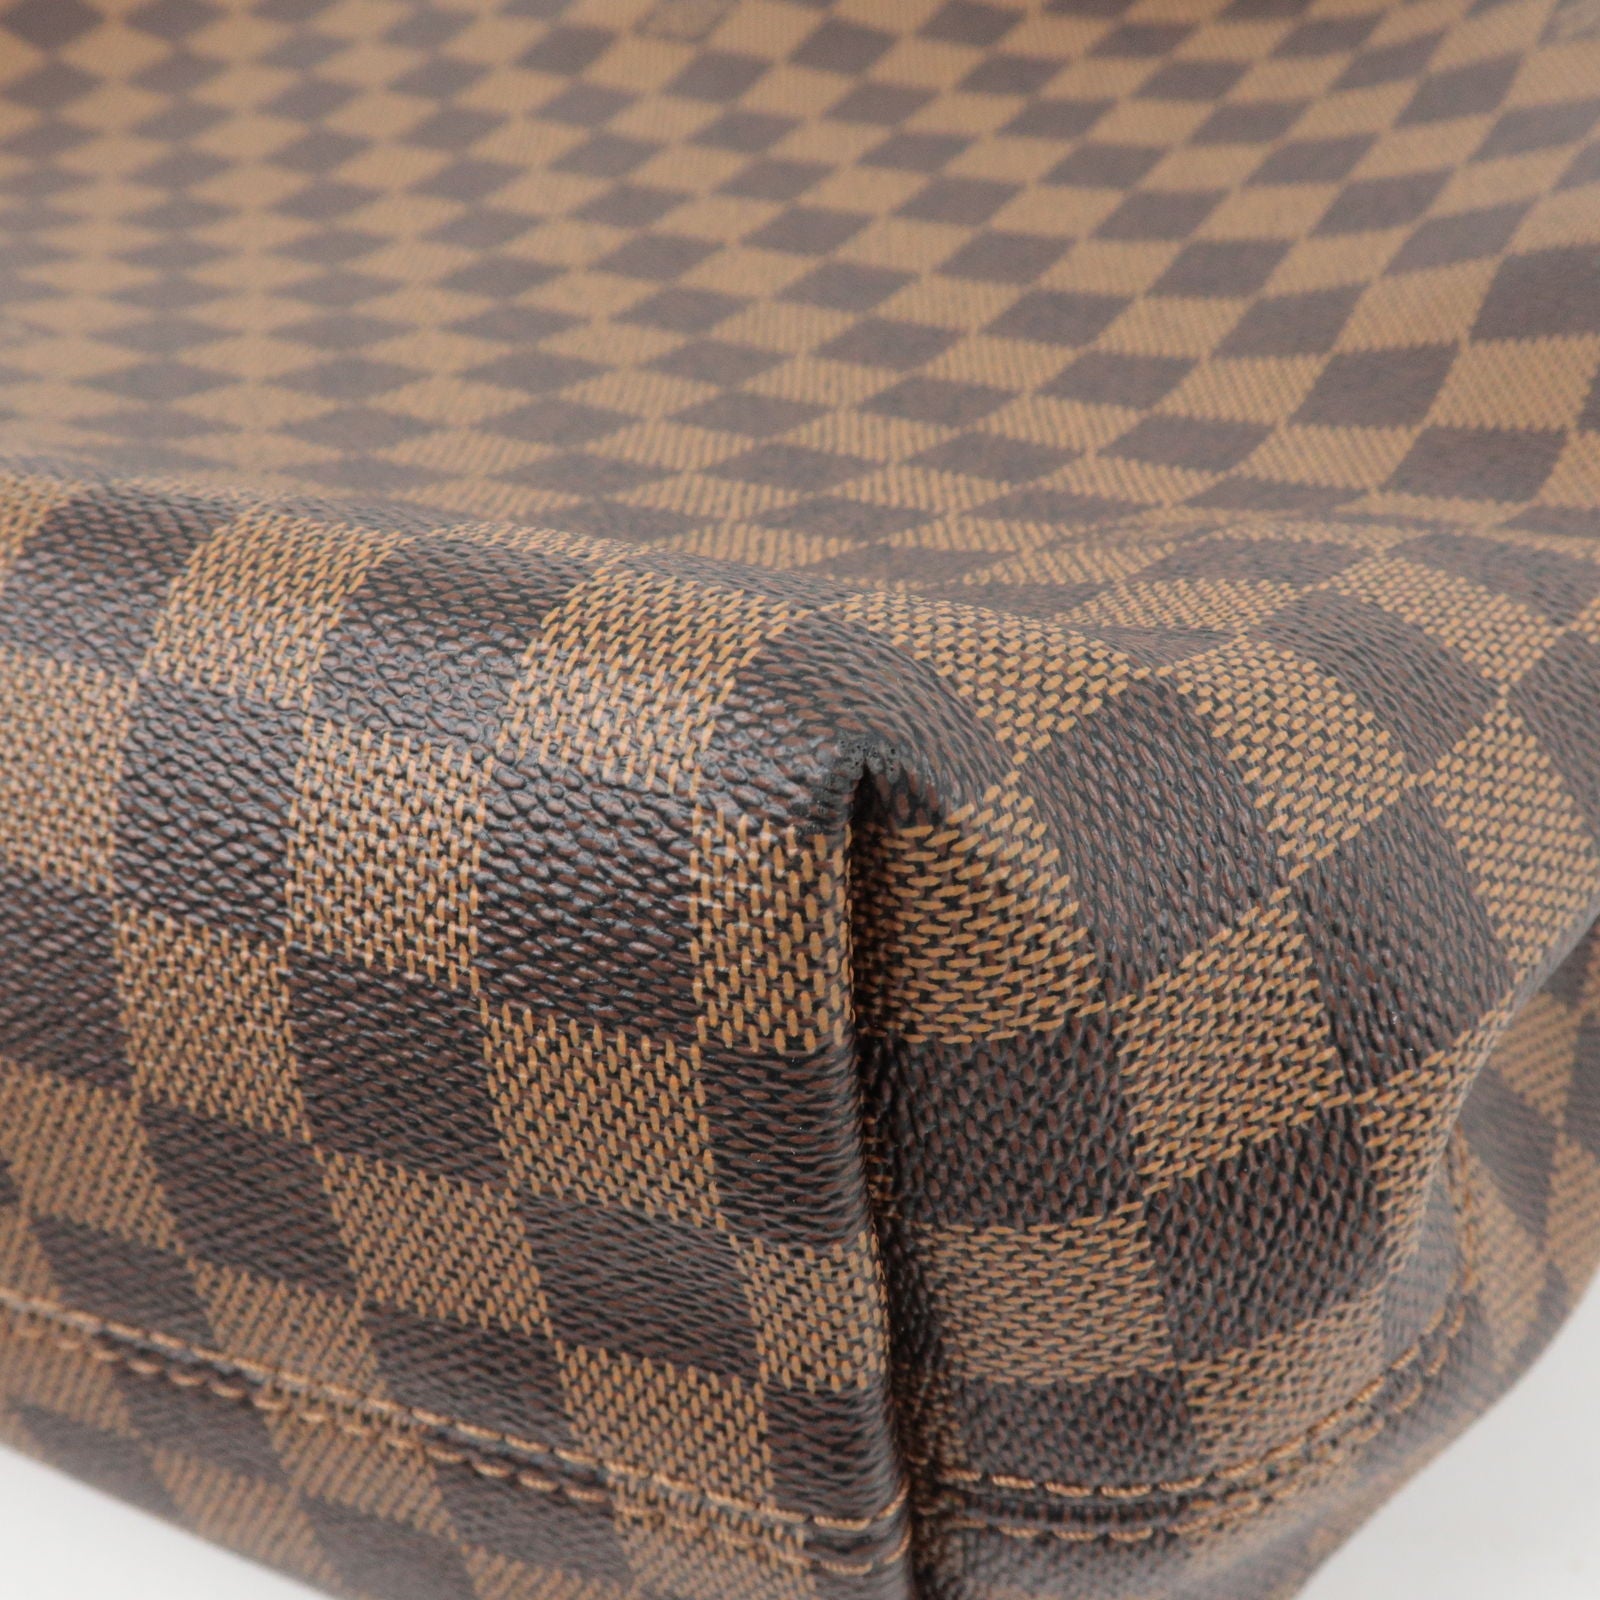 Buy Louis Vuitton Damier Ebene Graceful MM Tote Handbag Article:N44045 at